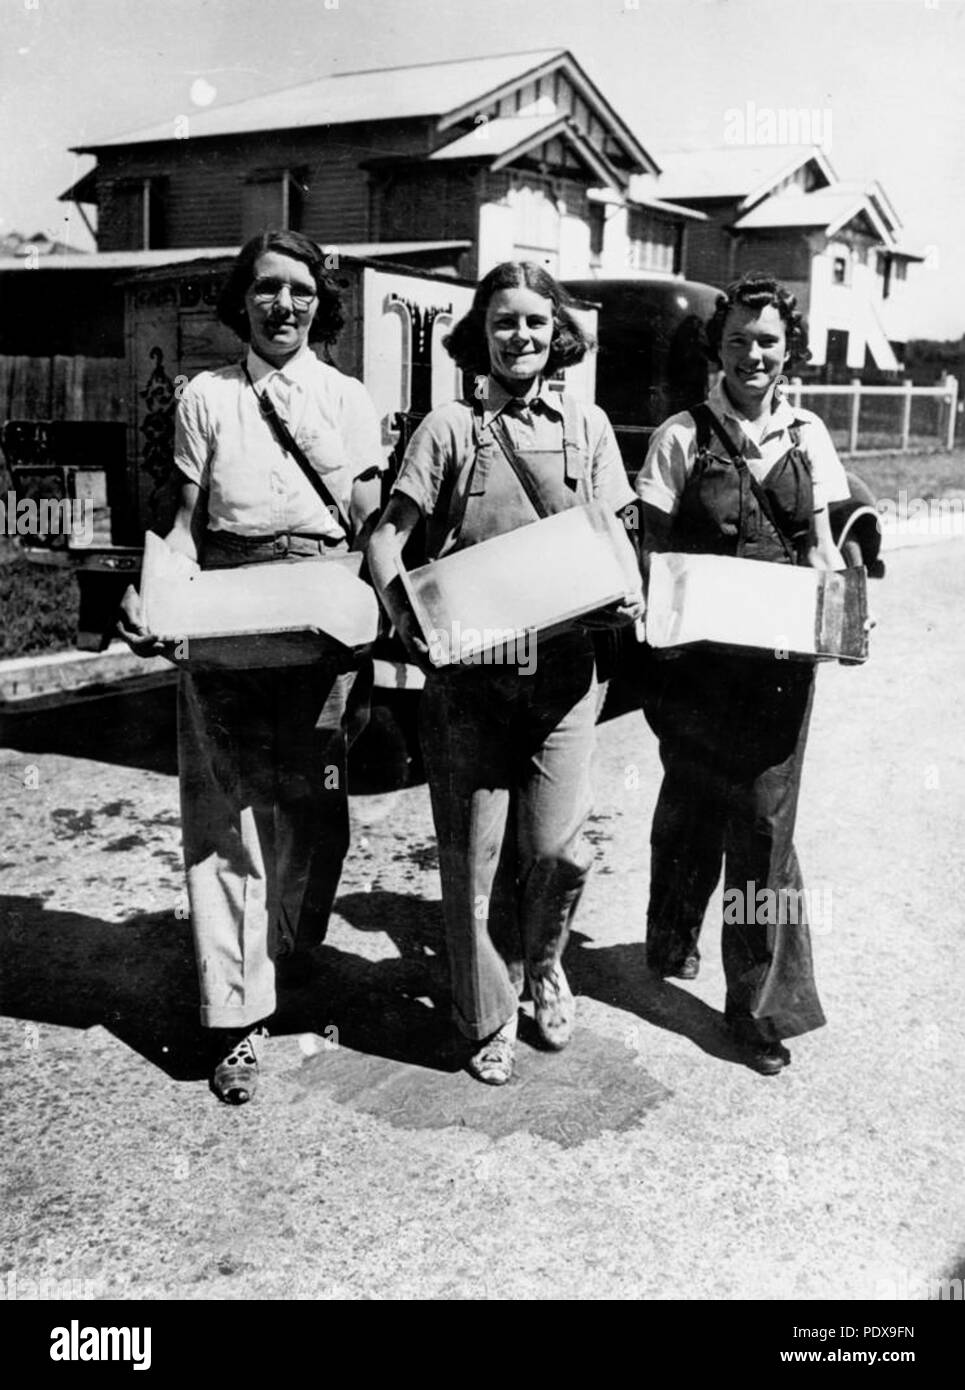 276 StateLibQld 1 90468 Women selling ice in the suburbs, Brisbane, 1942 Stock Photo